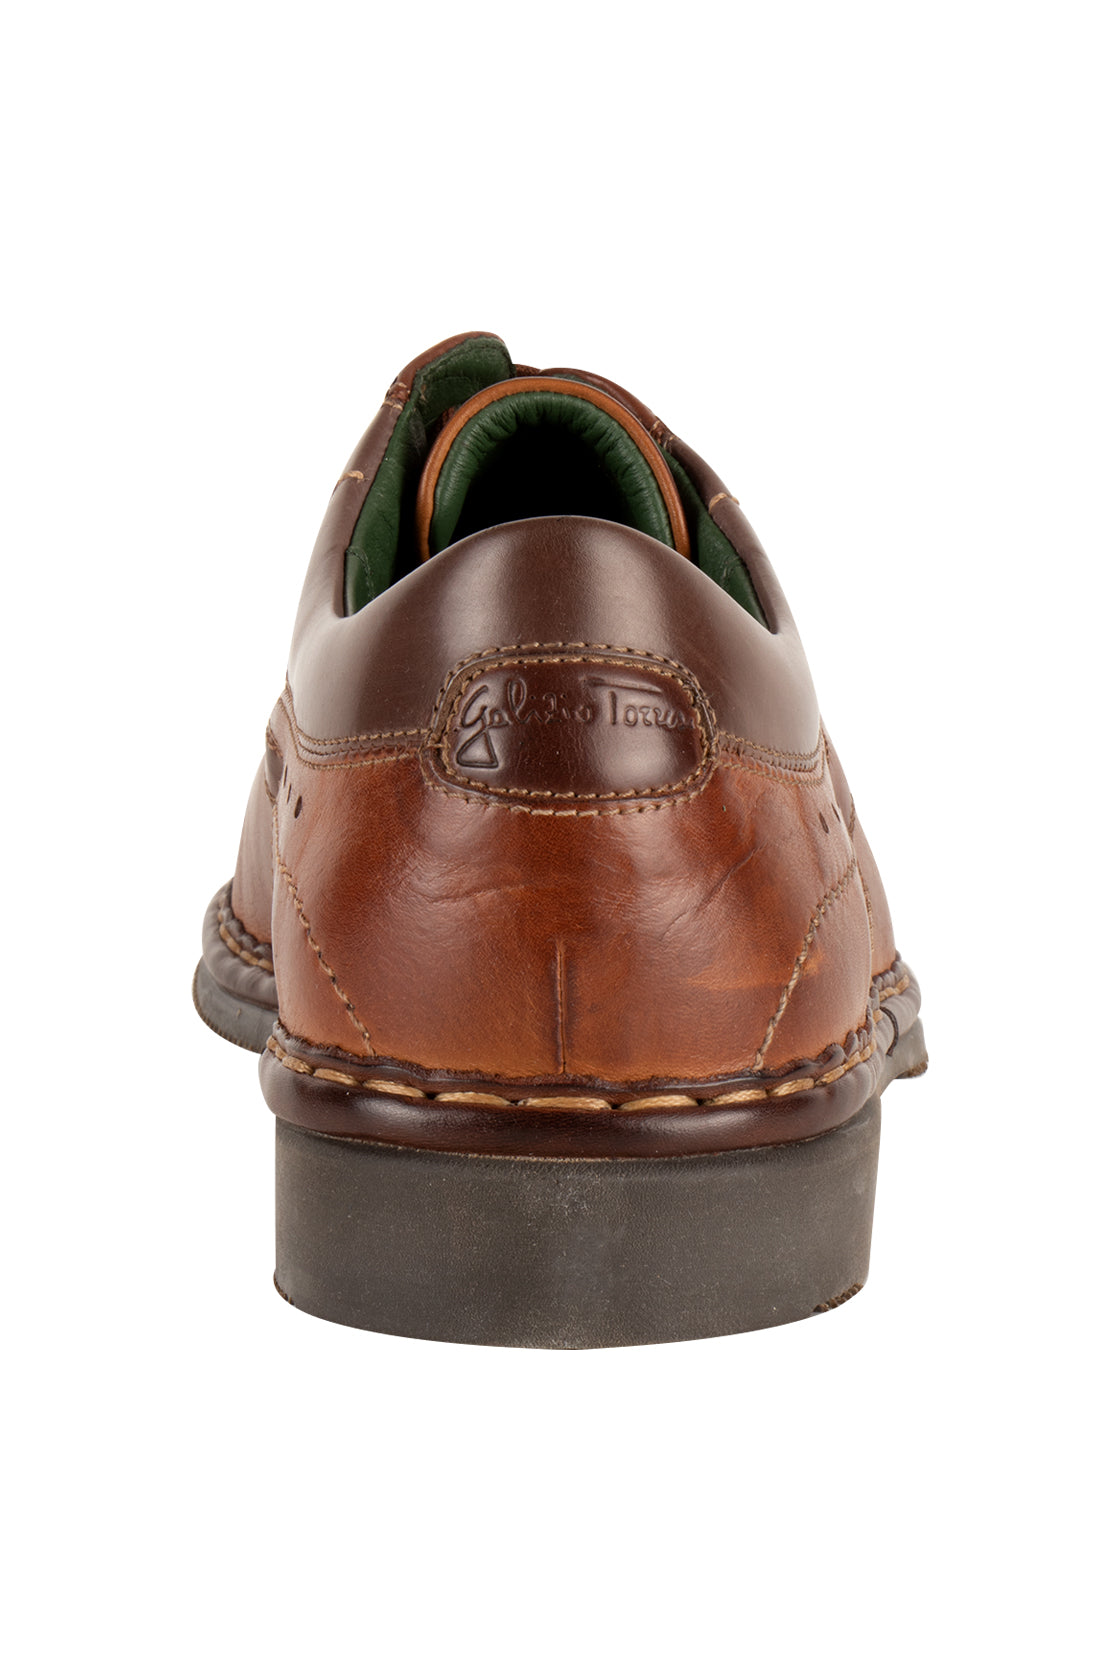 Galizio Torresi Lace Up Shoe Marrone-Sudan